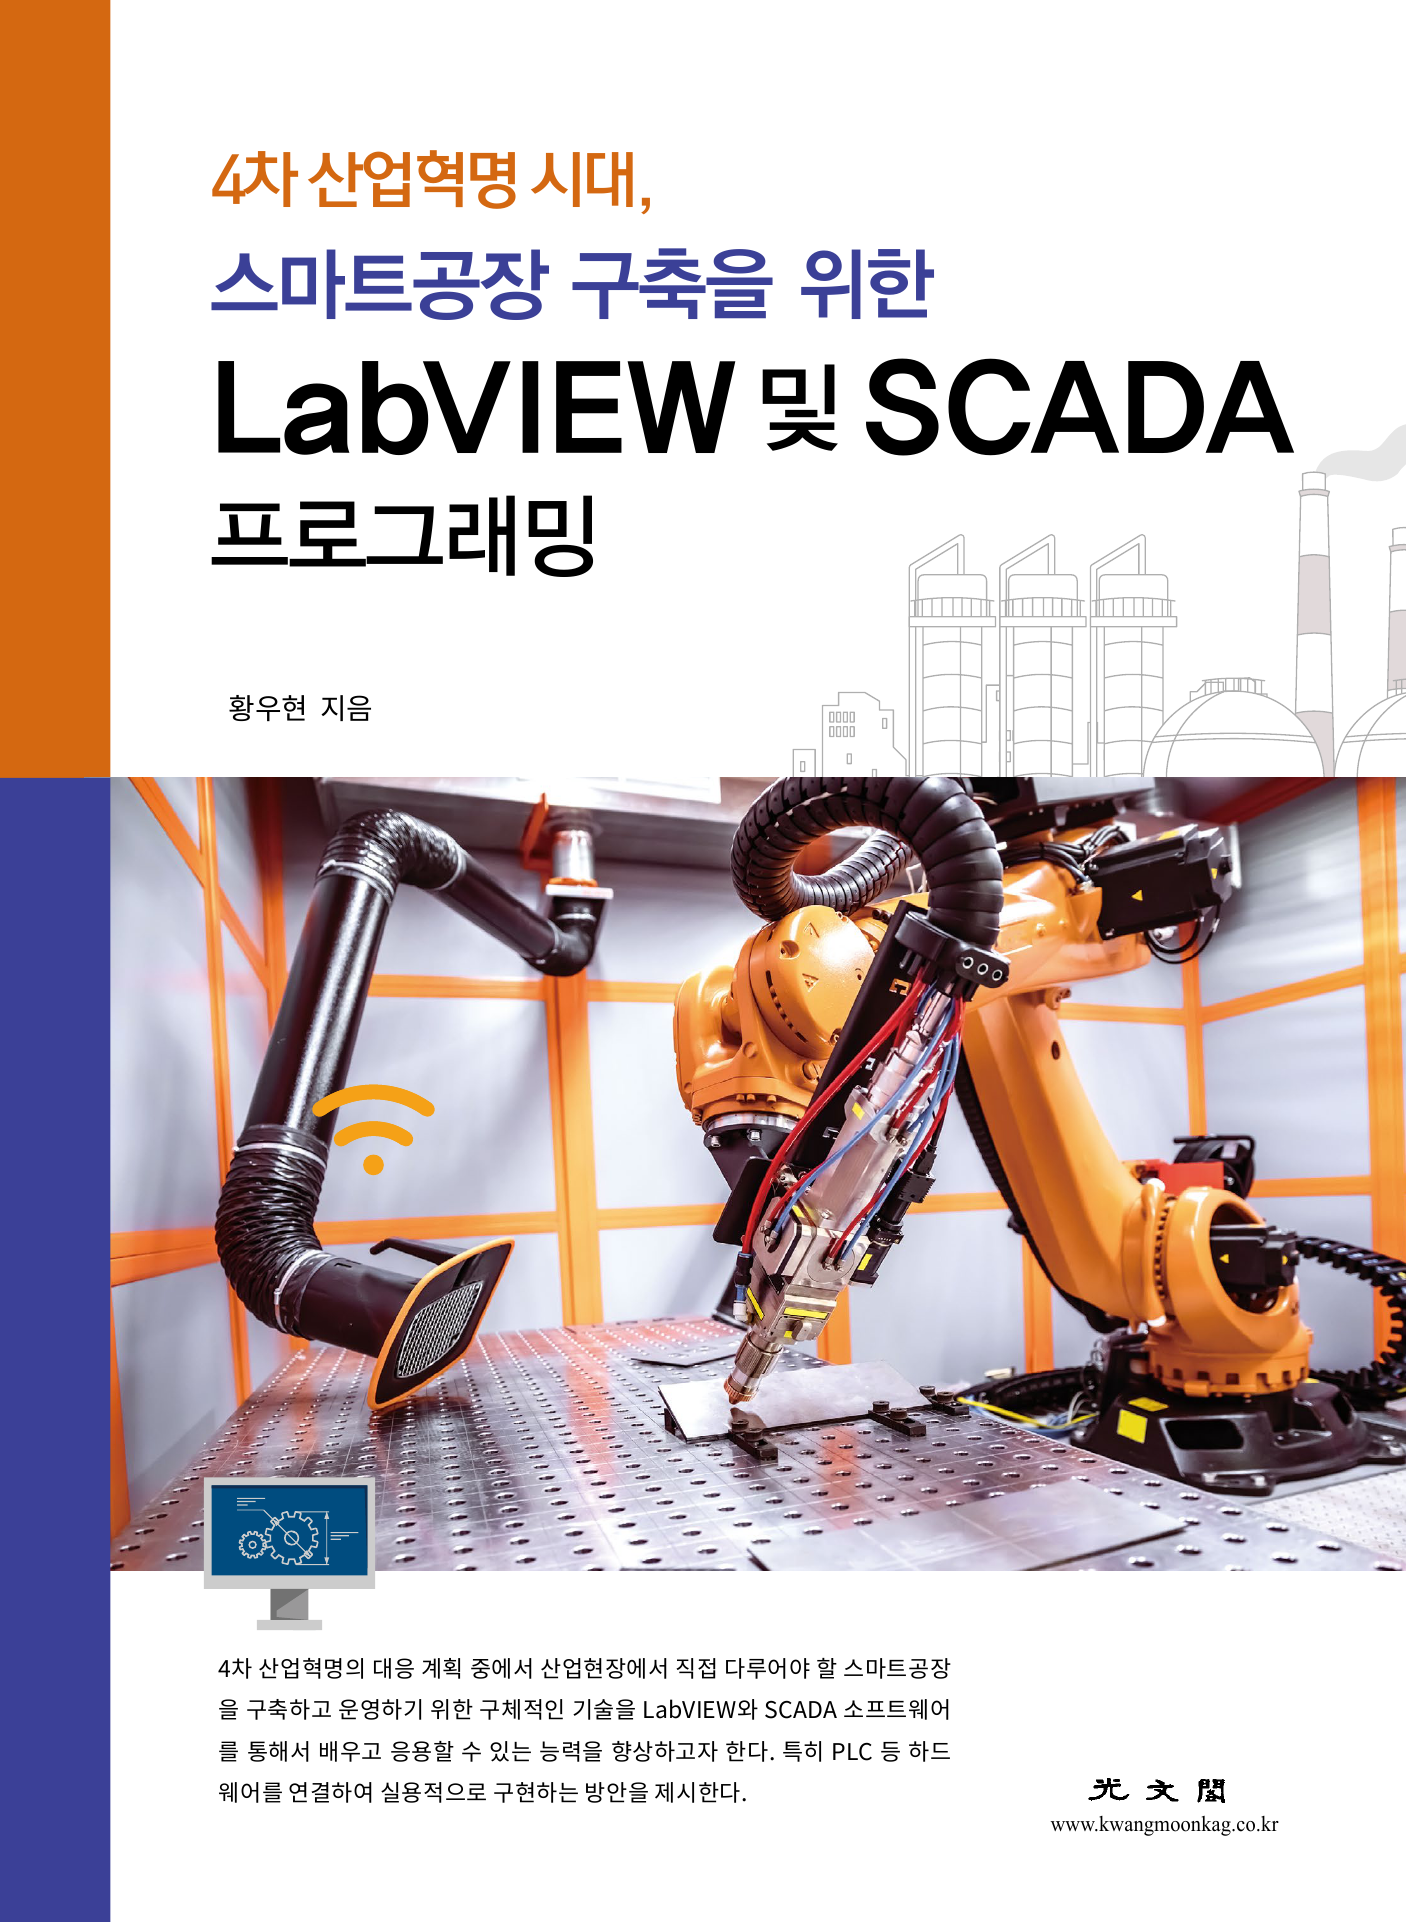 LabVIEW 및 SCADA 프로그래밍(4차 산업혁명 시대 스마트공장 구축을 위한)